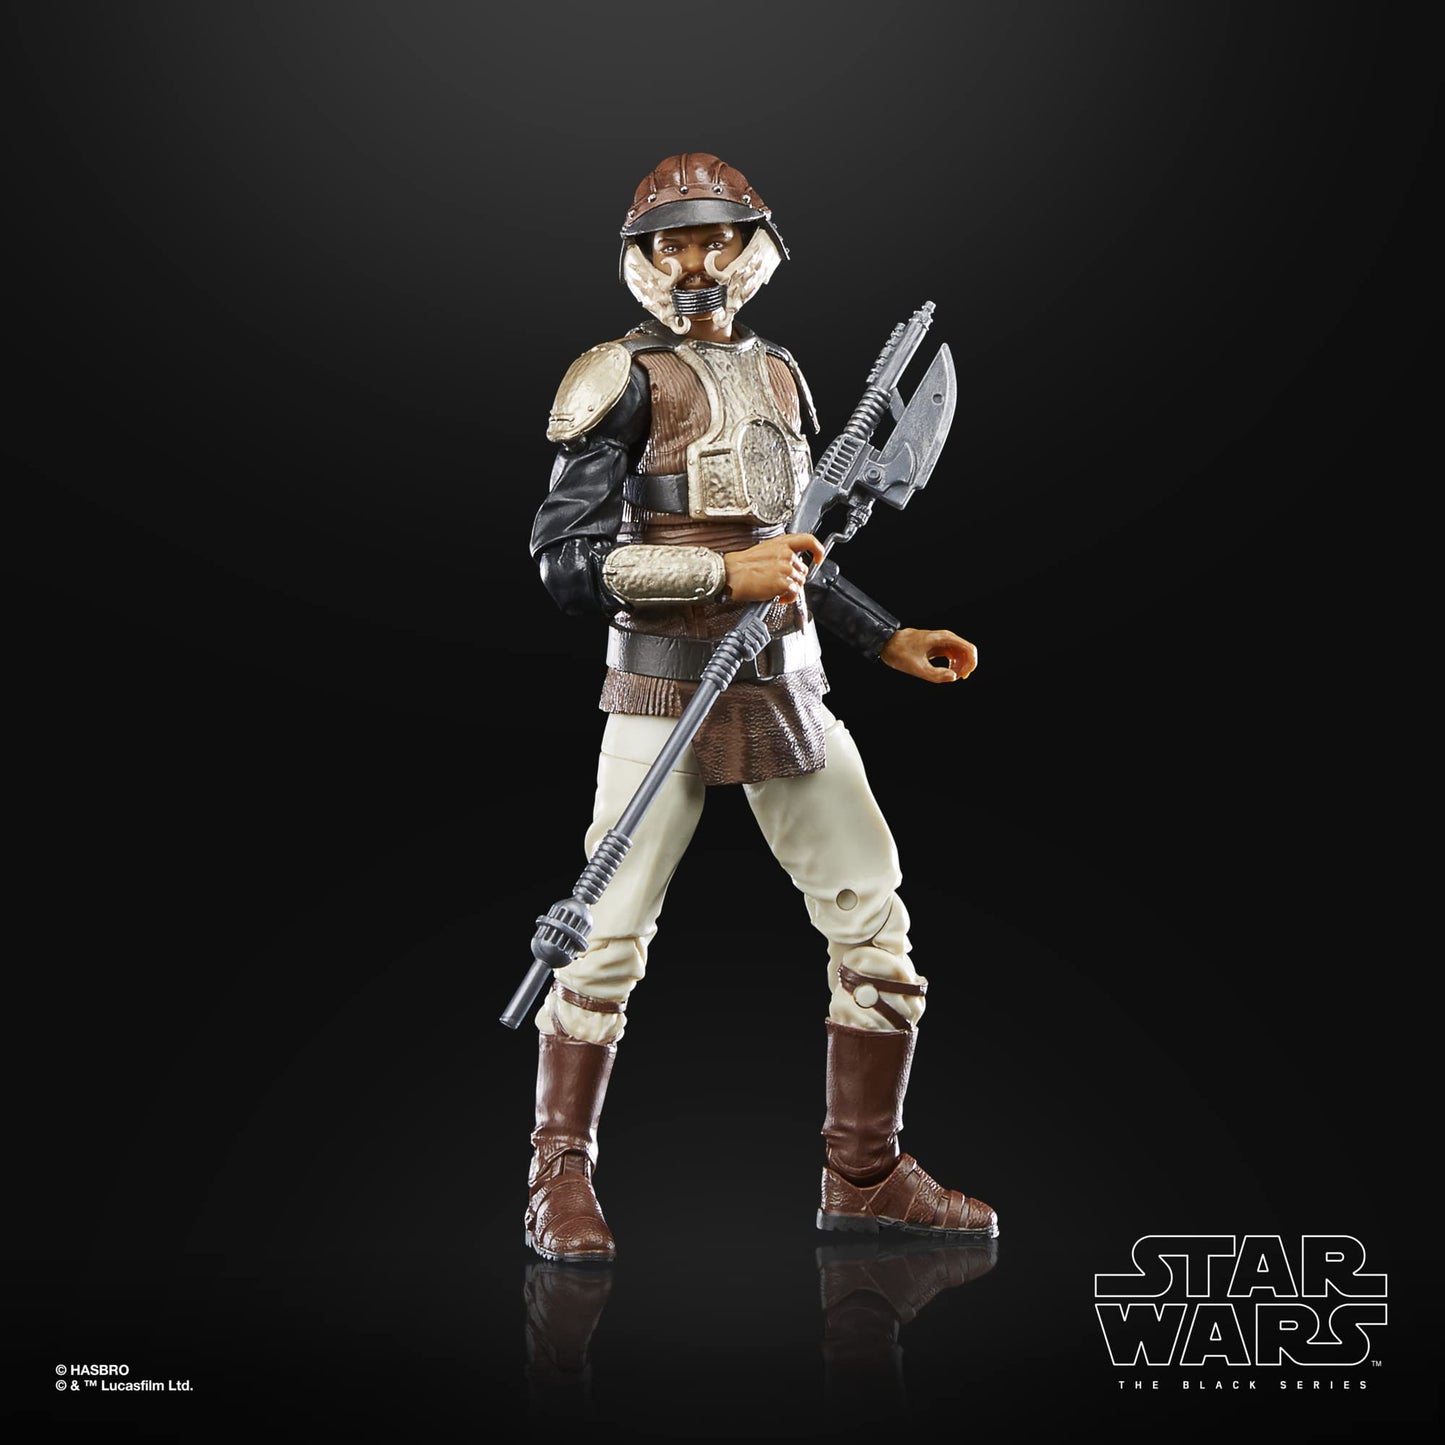 Star Wars: Return of the Jedi Lando Calrissian (Skiff Guard) Action Figure